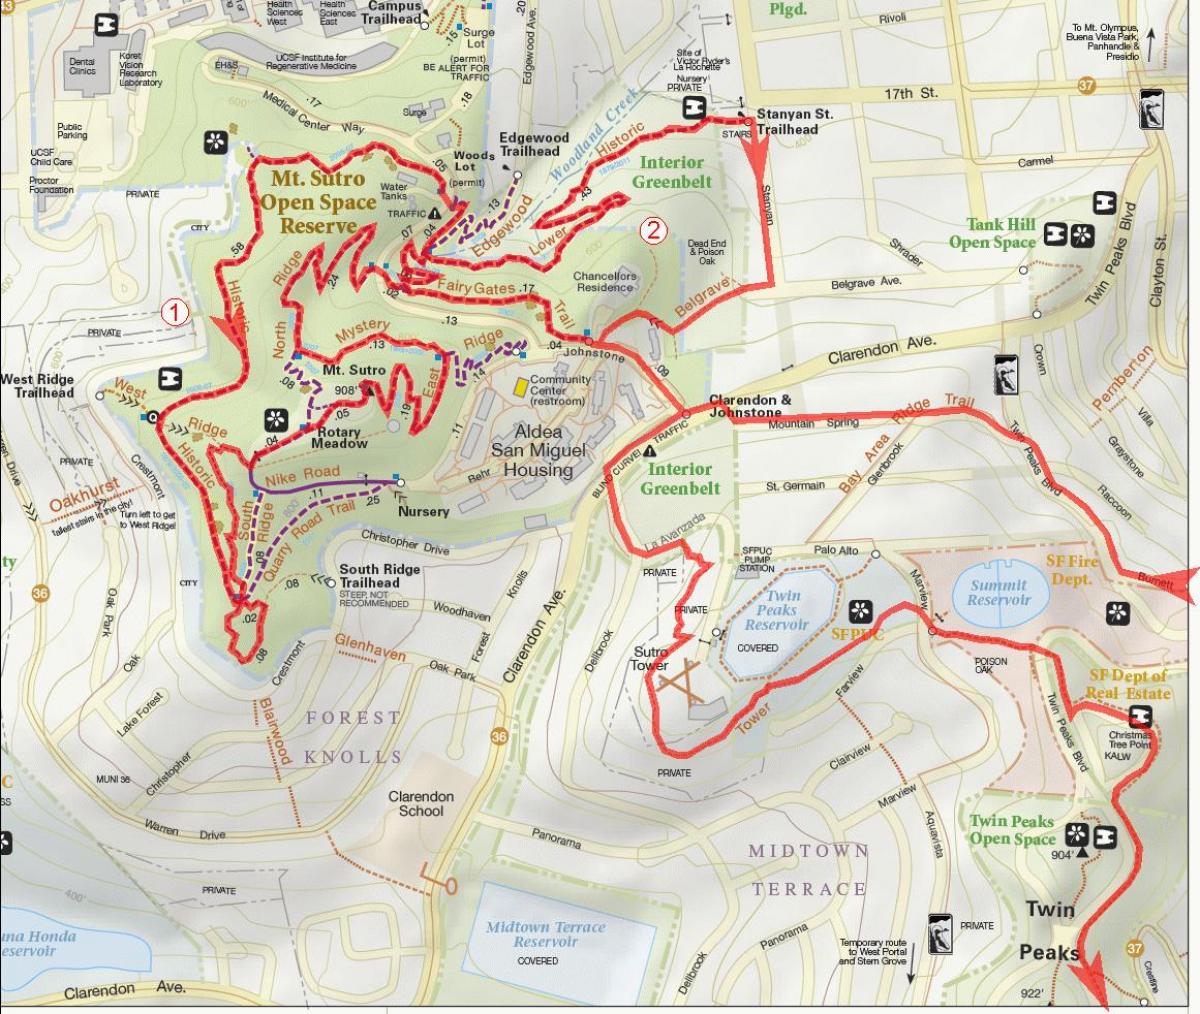 Carte de la région de la baie de sentiers de vélo de